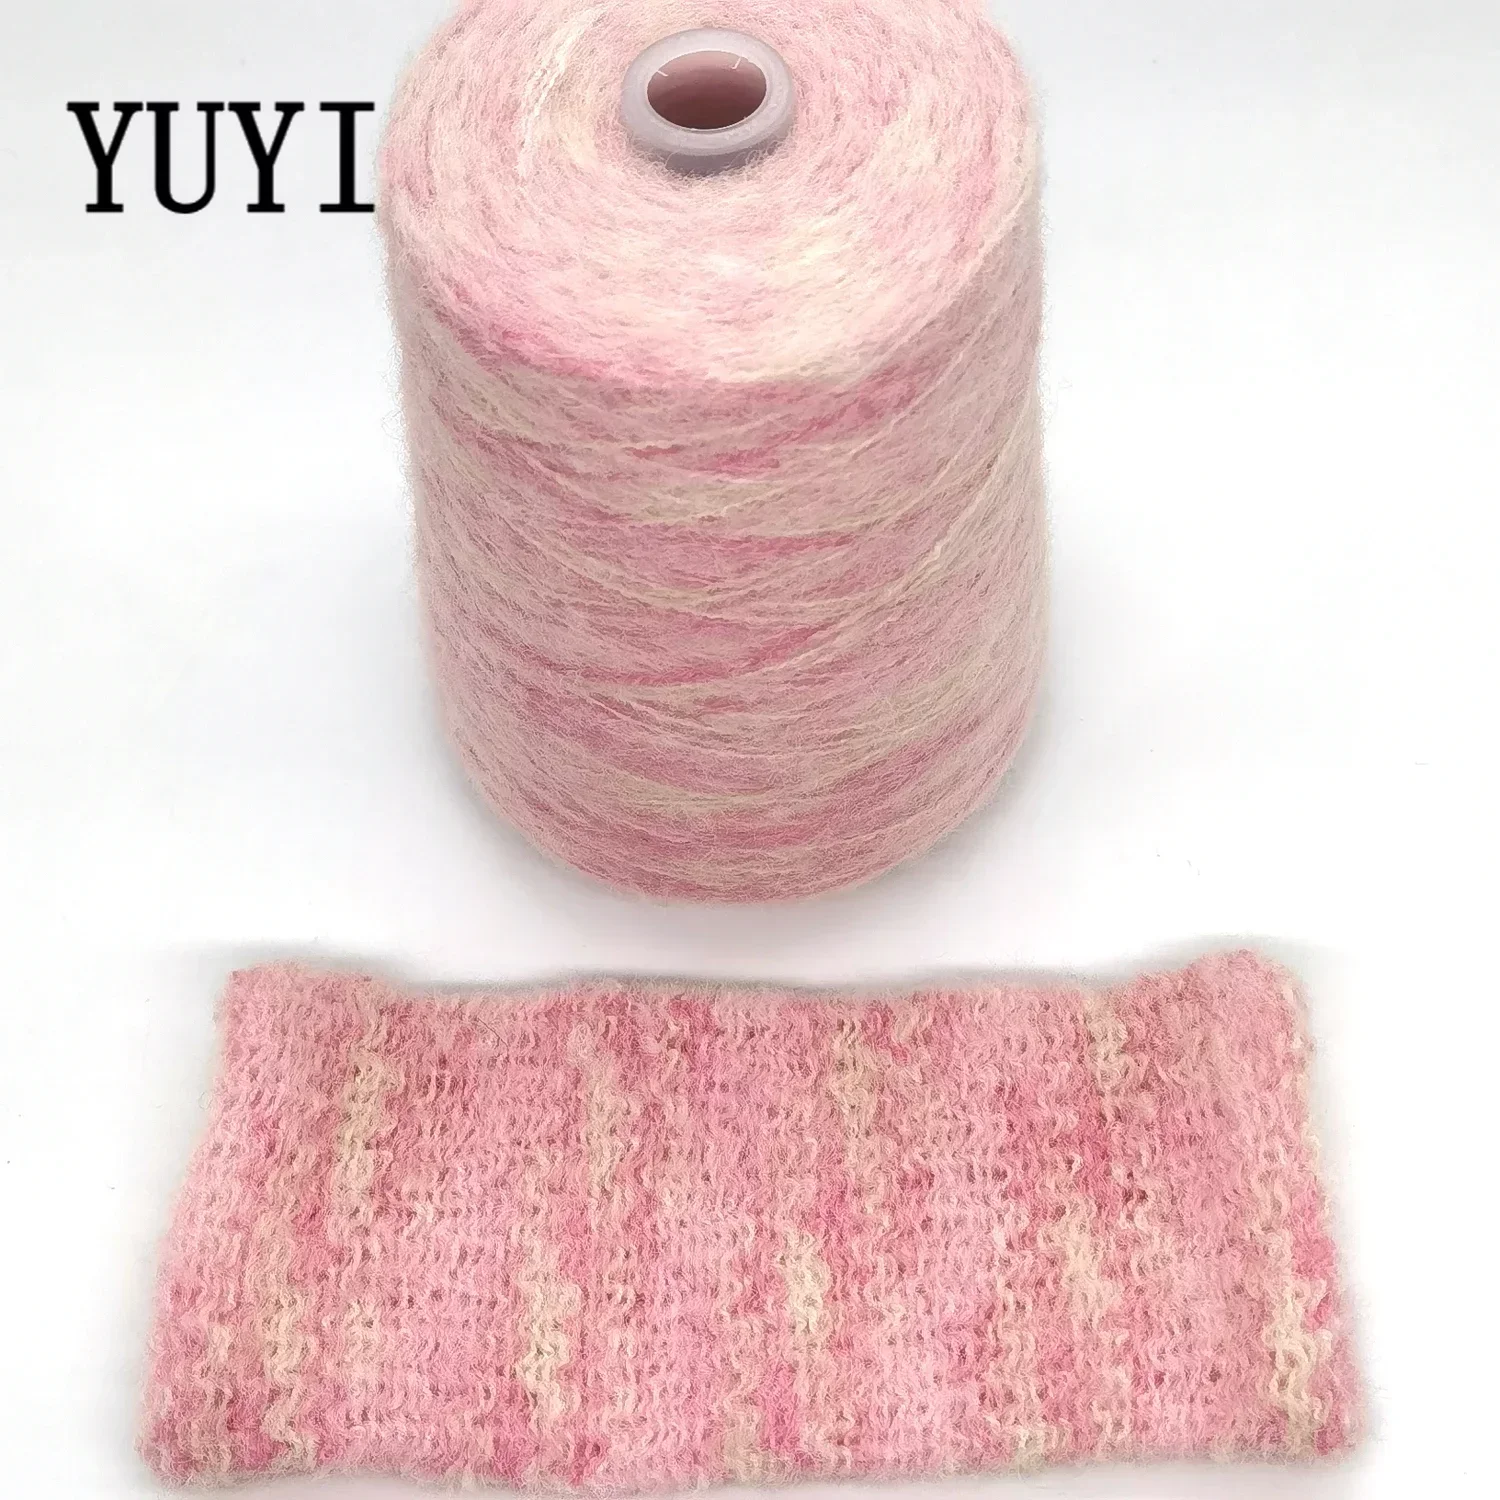 

YUYI 500g Mohair Yarn Rainbow Super soft Knitting Yarn Crochet Baby Wool Yarn for Knitting Sweater Socks Factory direct sales